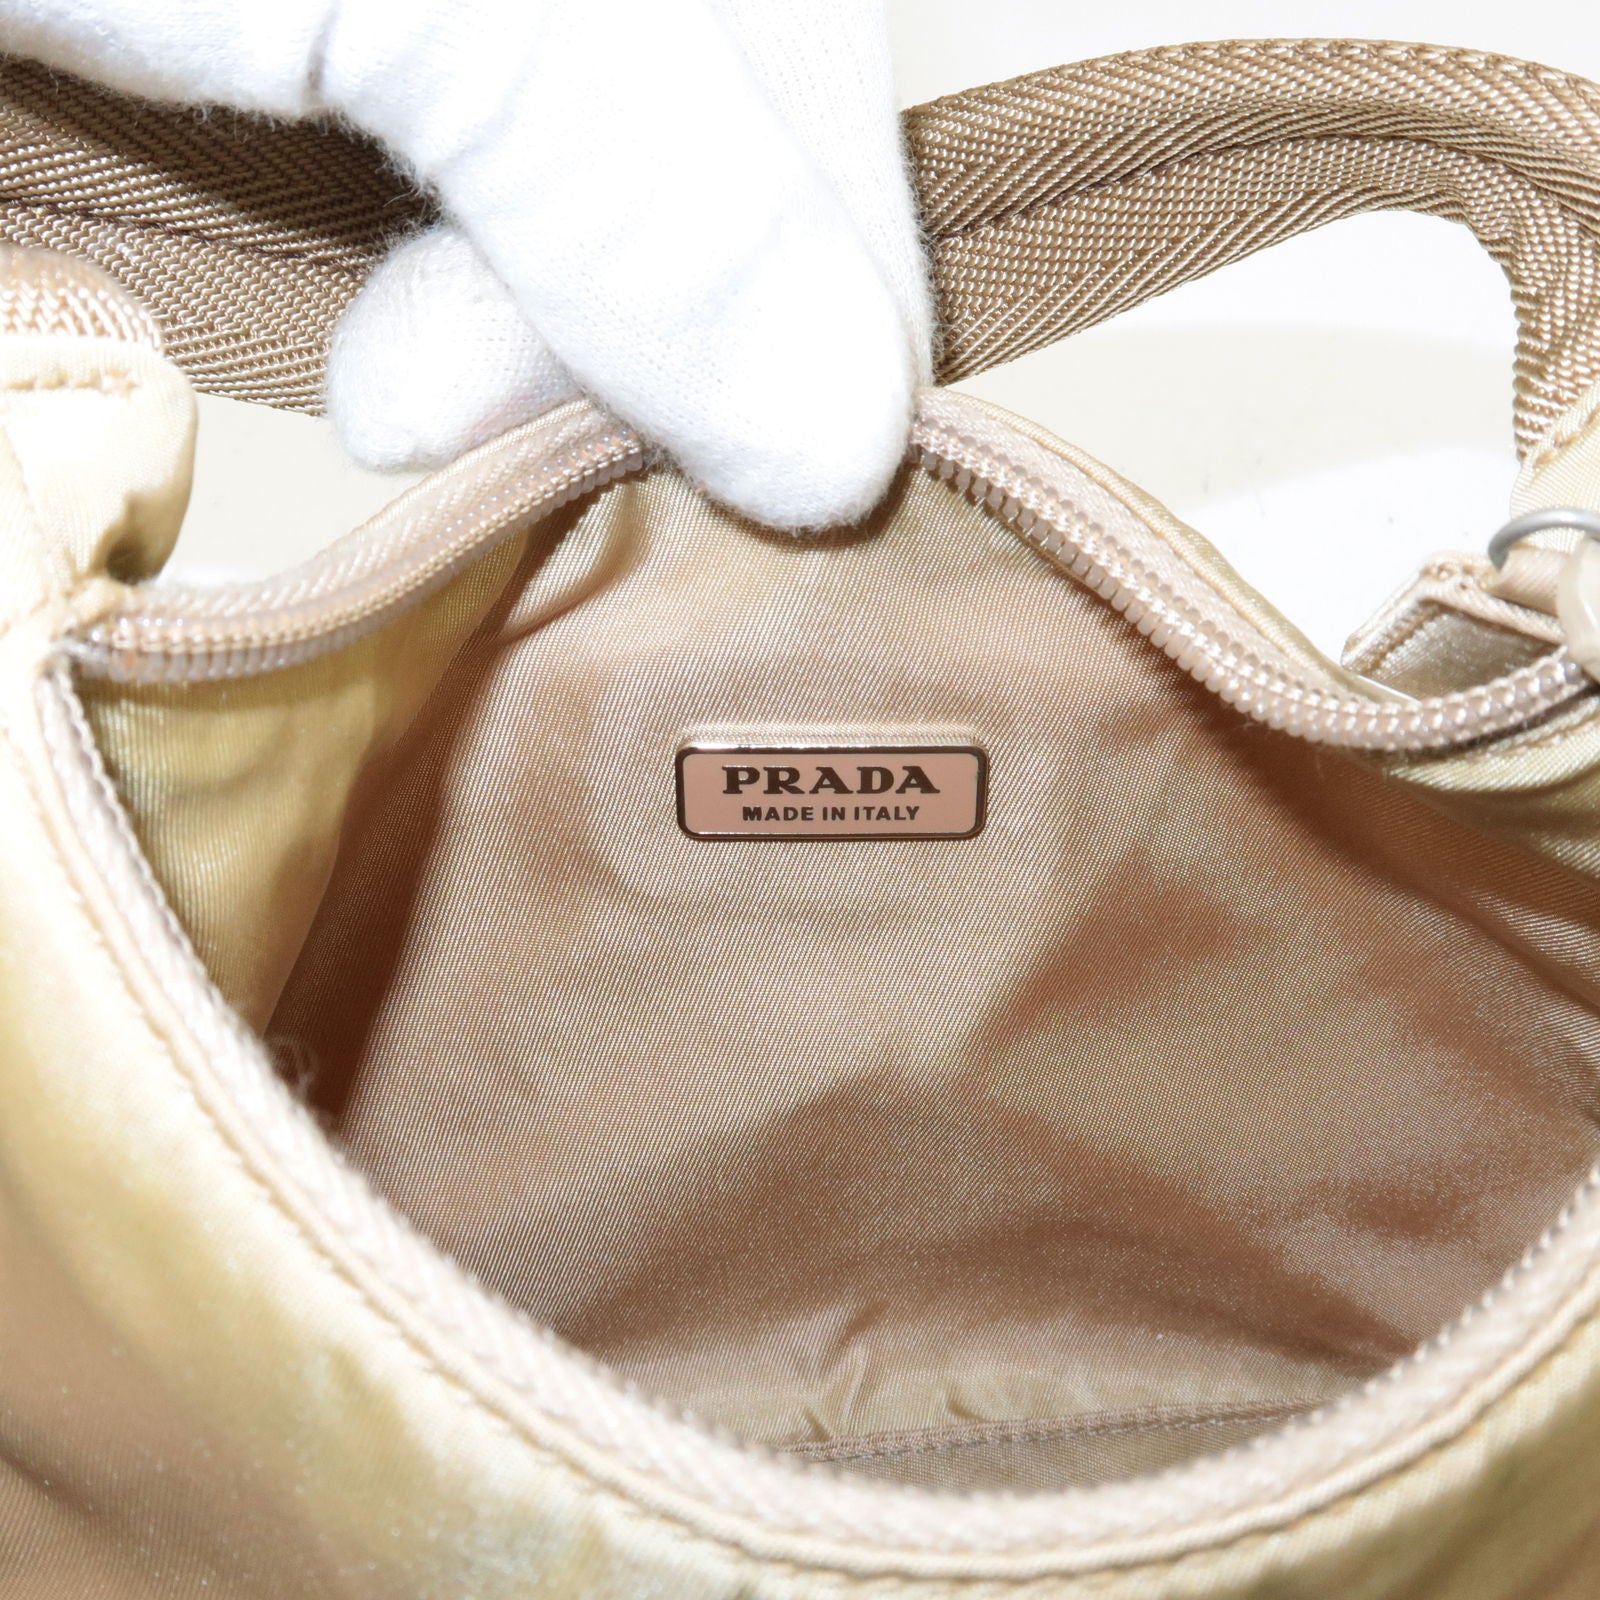 prada black fabric bucket bags - Nylon - PRADA - Pouch - Hand